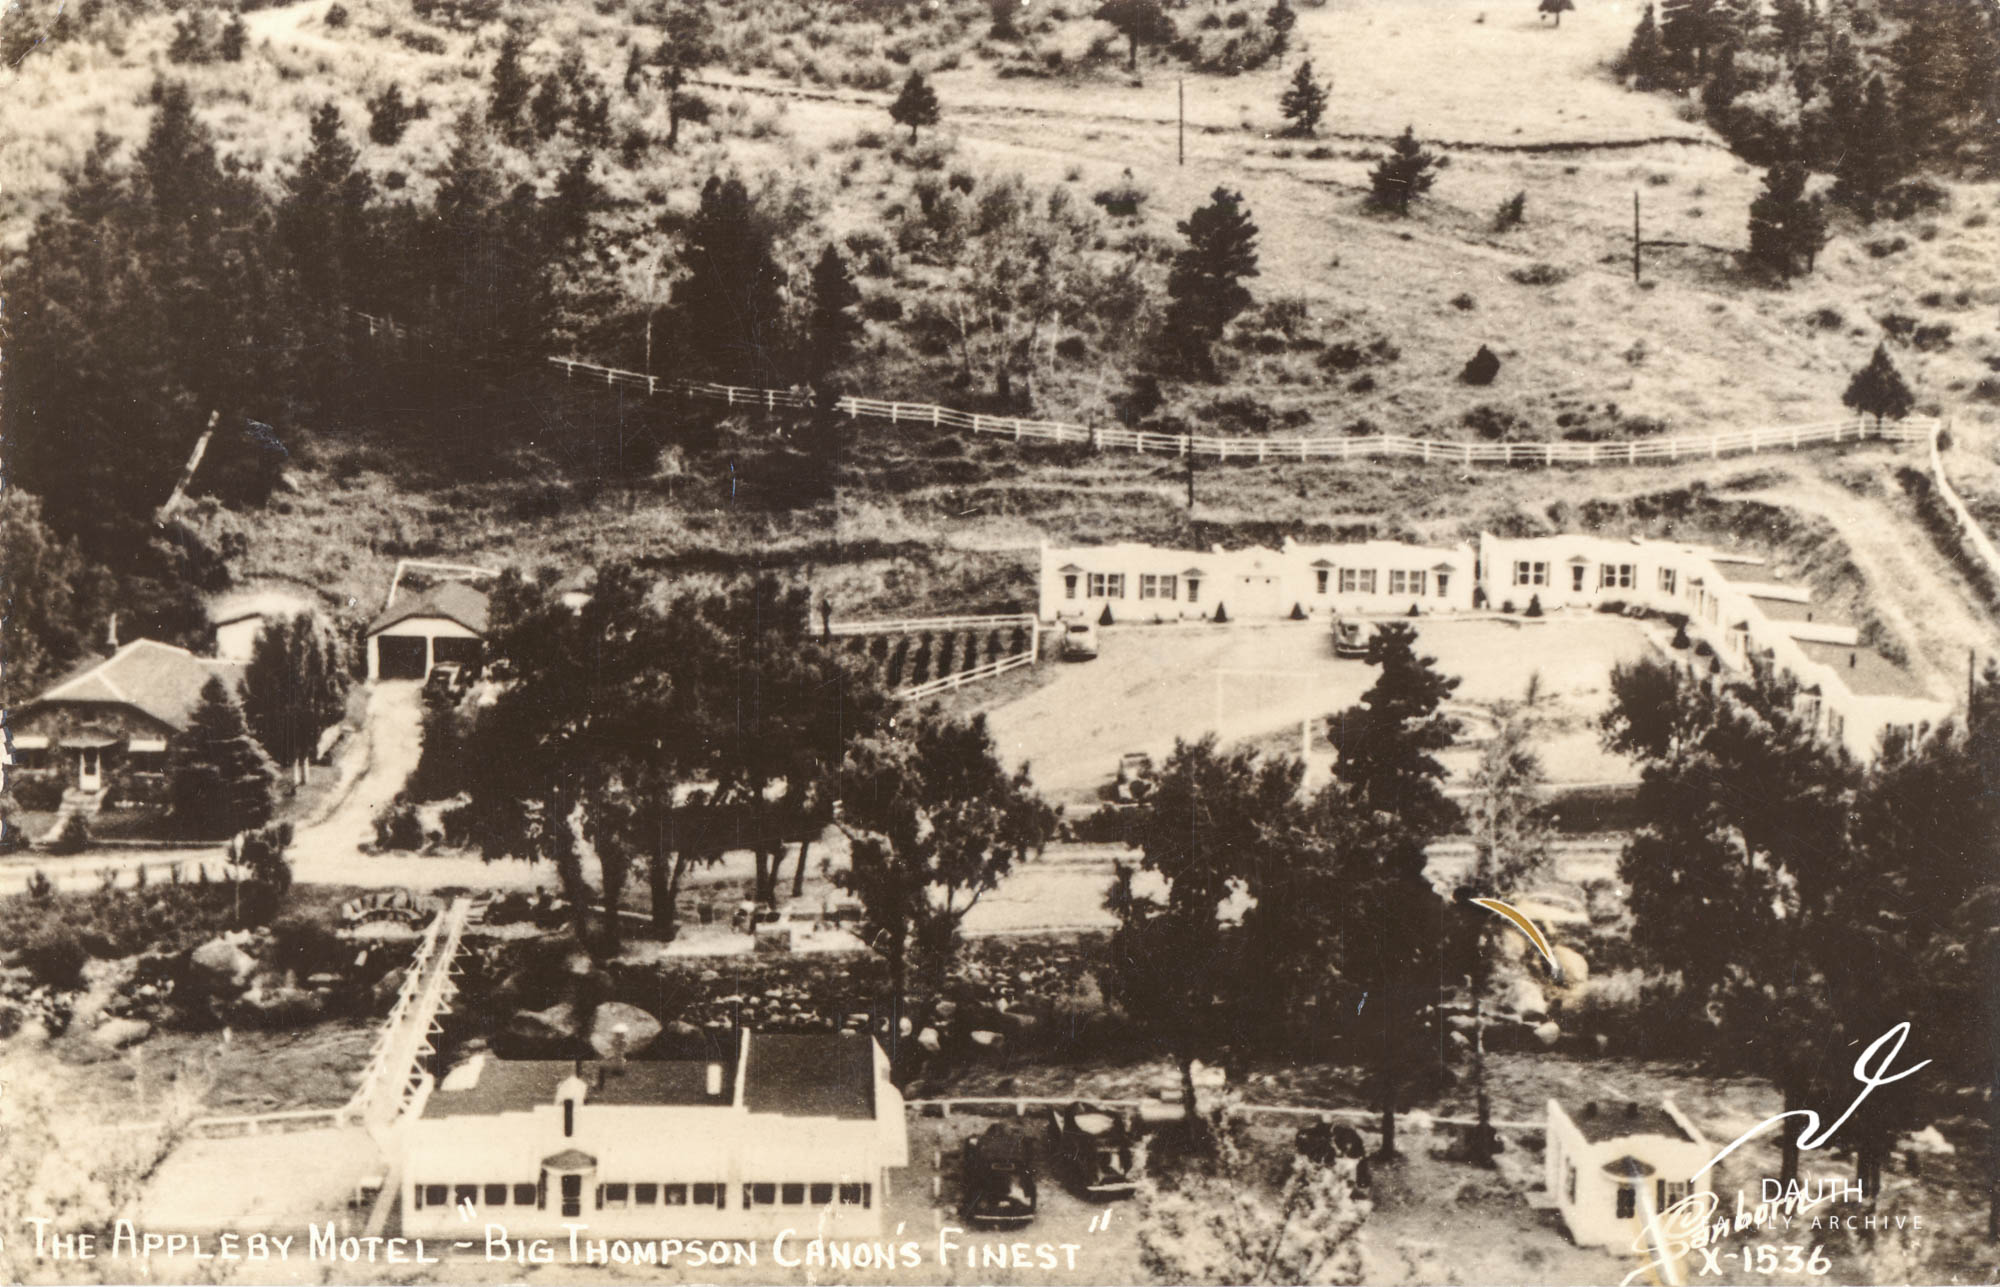 Idlewild Lodge - idlewildlodge.github.io - Circa 1949 - Postcard of the Appleby Motel Complex